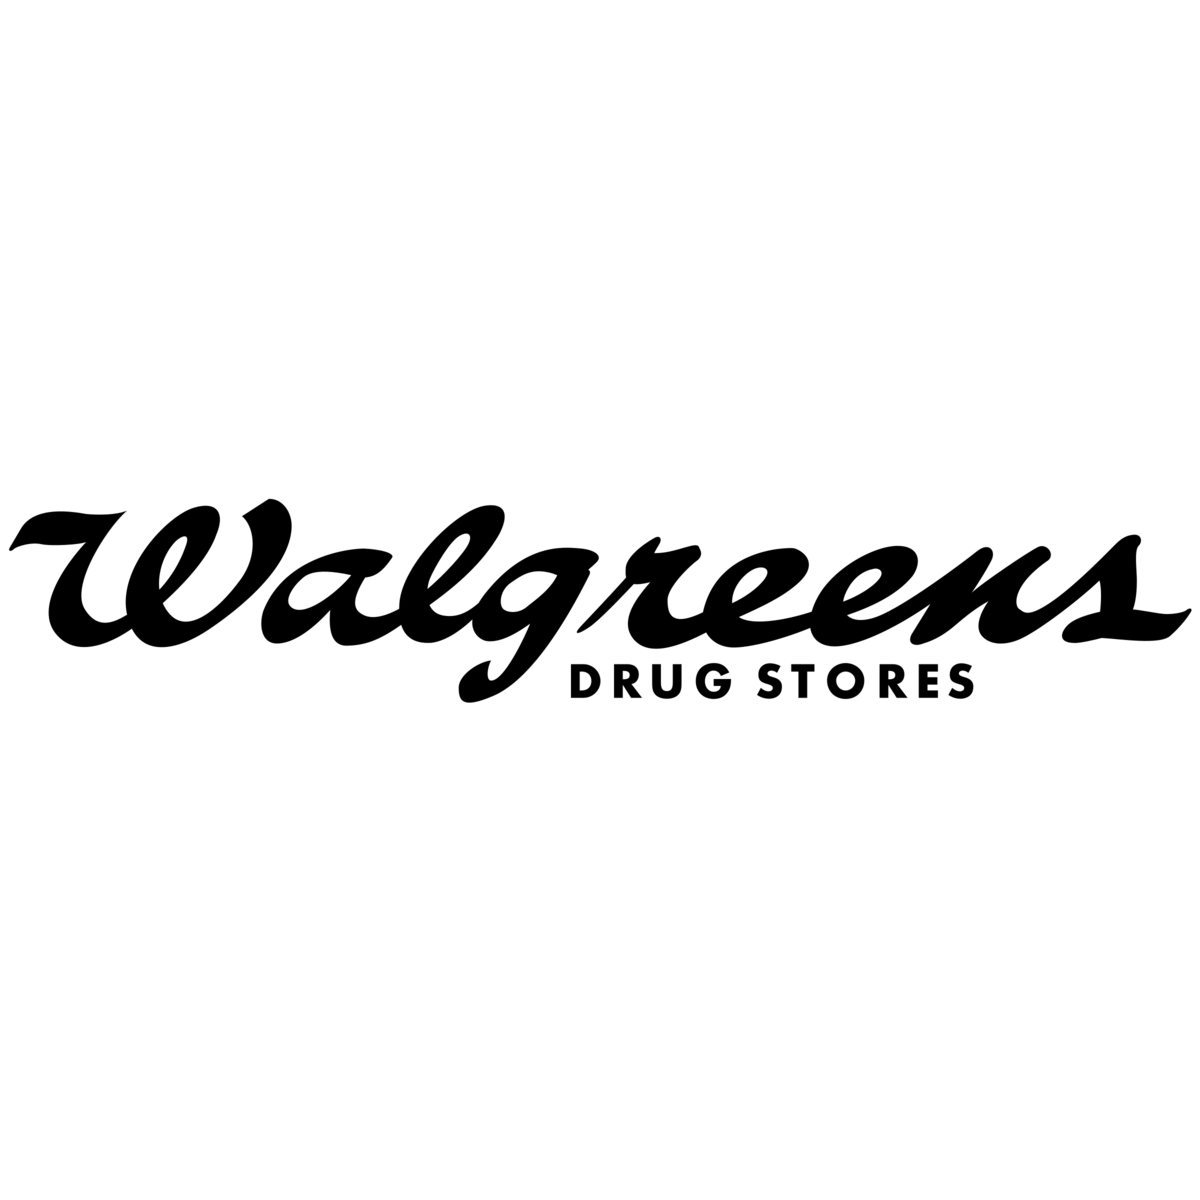 walgreens-1-logo-black-and-white